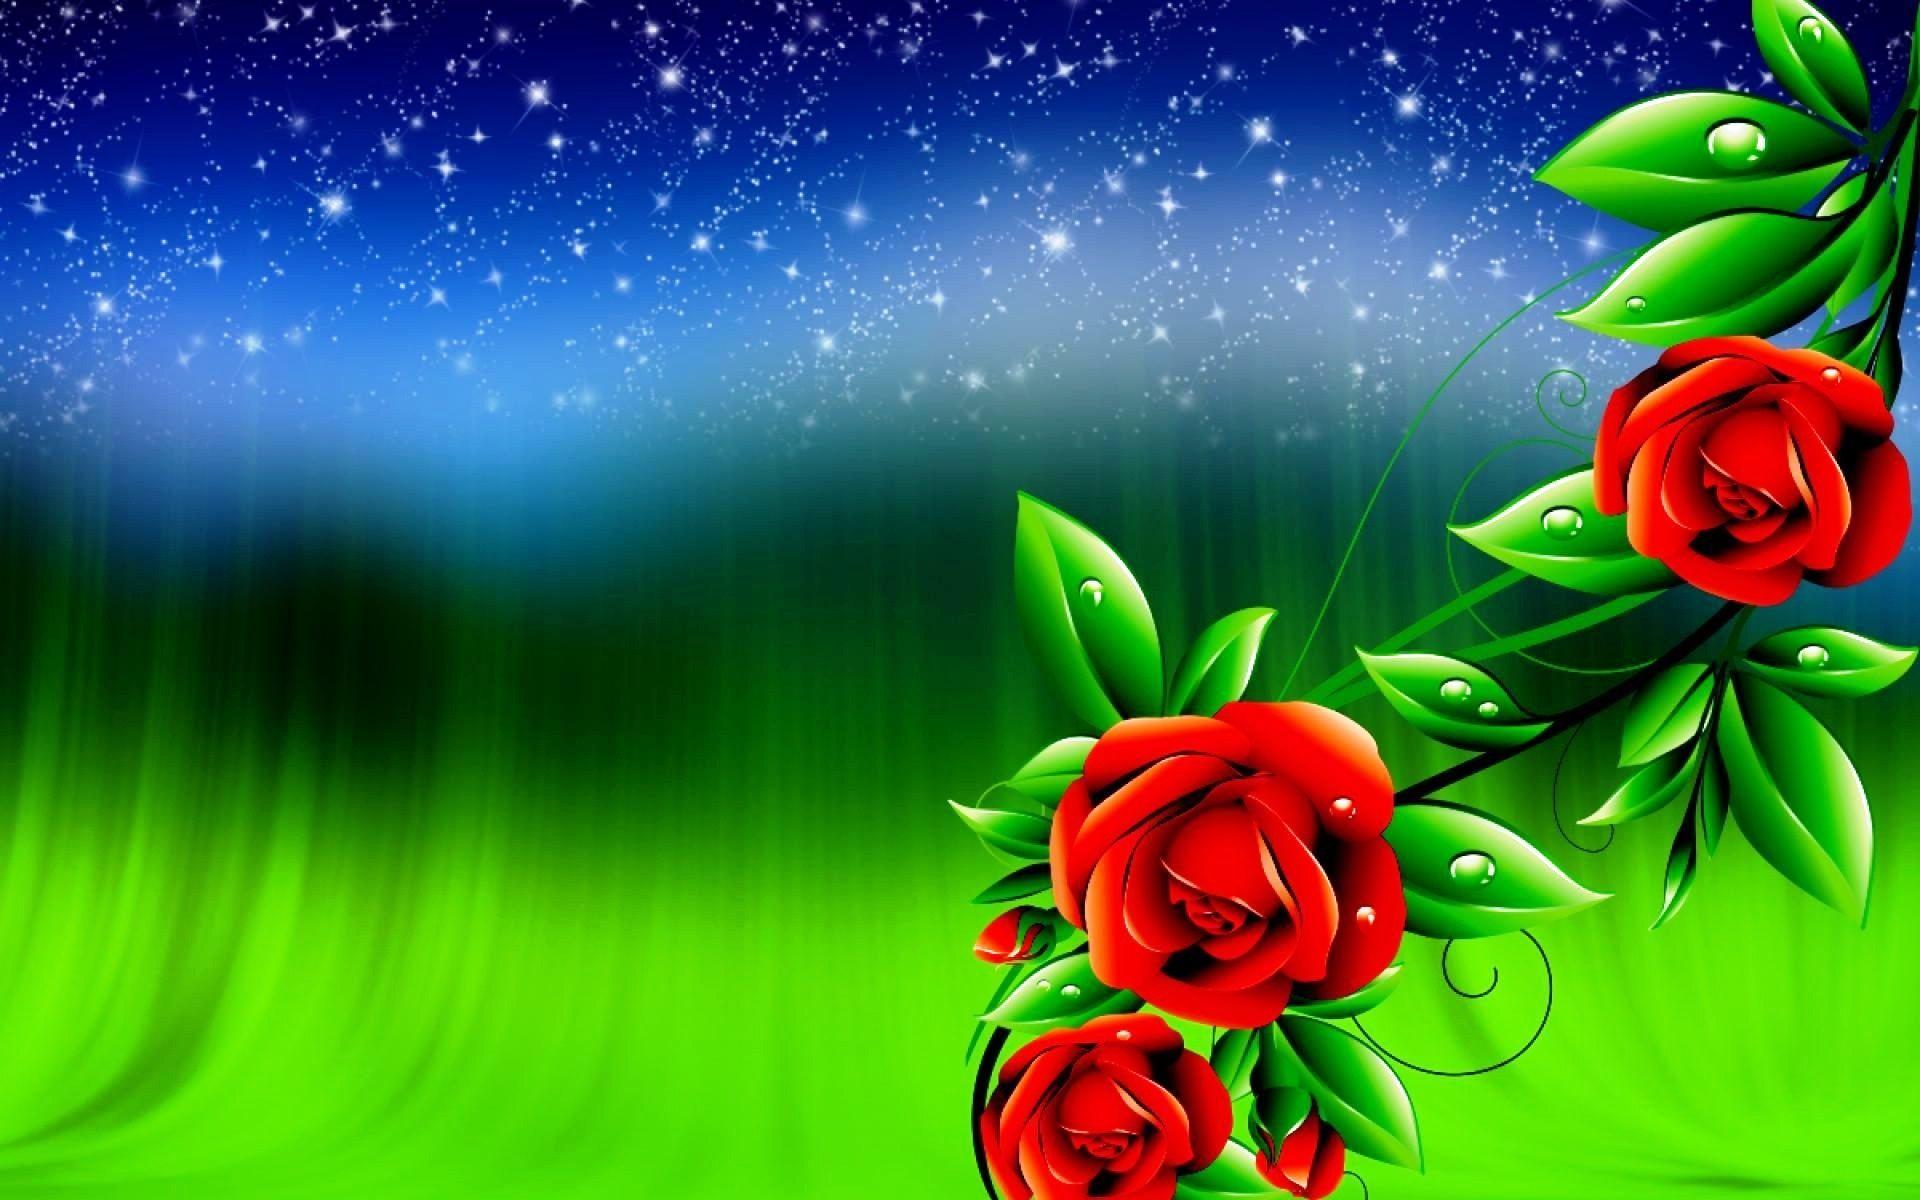 Wallpaper.wiki Rose Flowers Digital Design 3D Wallpaper PIC